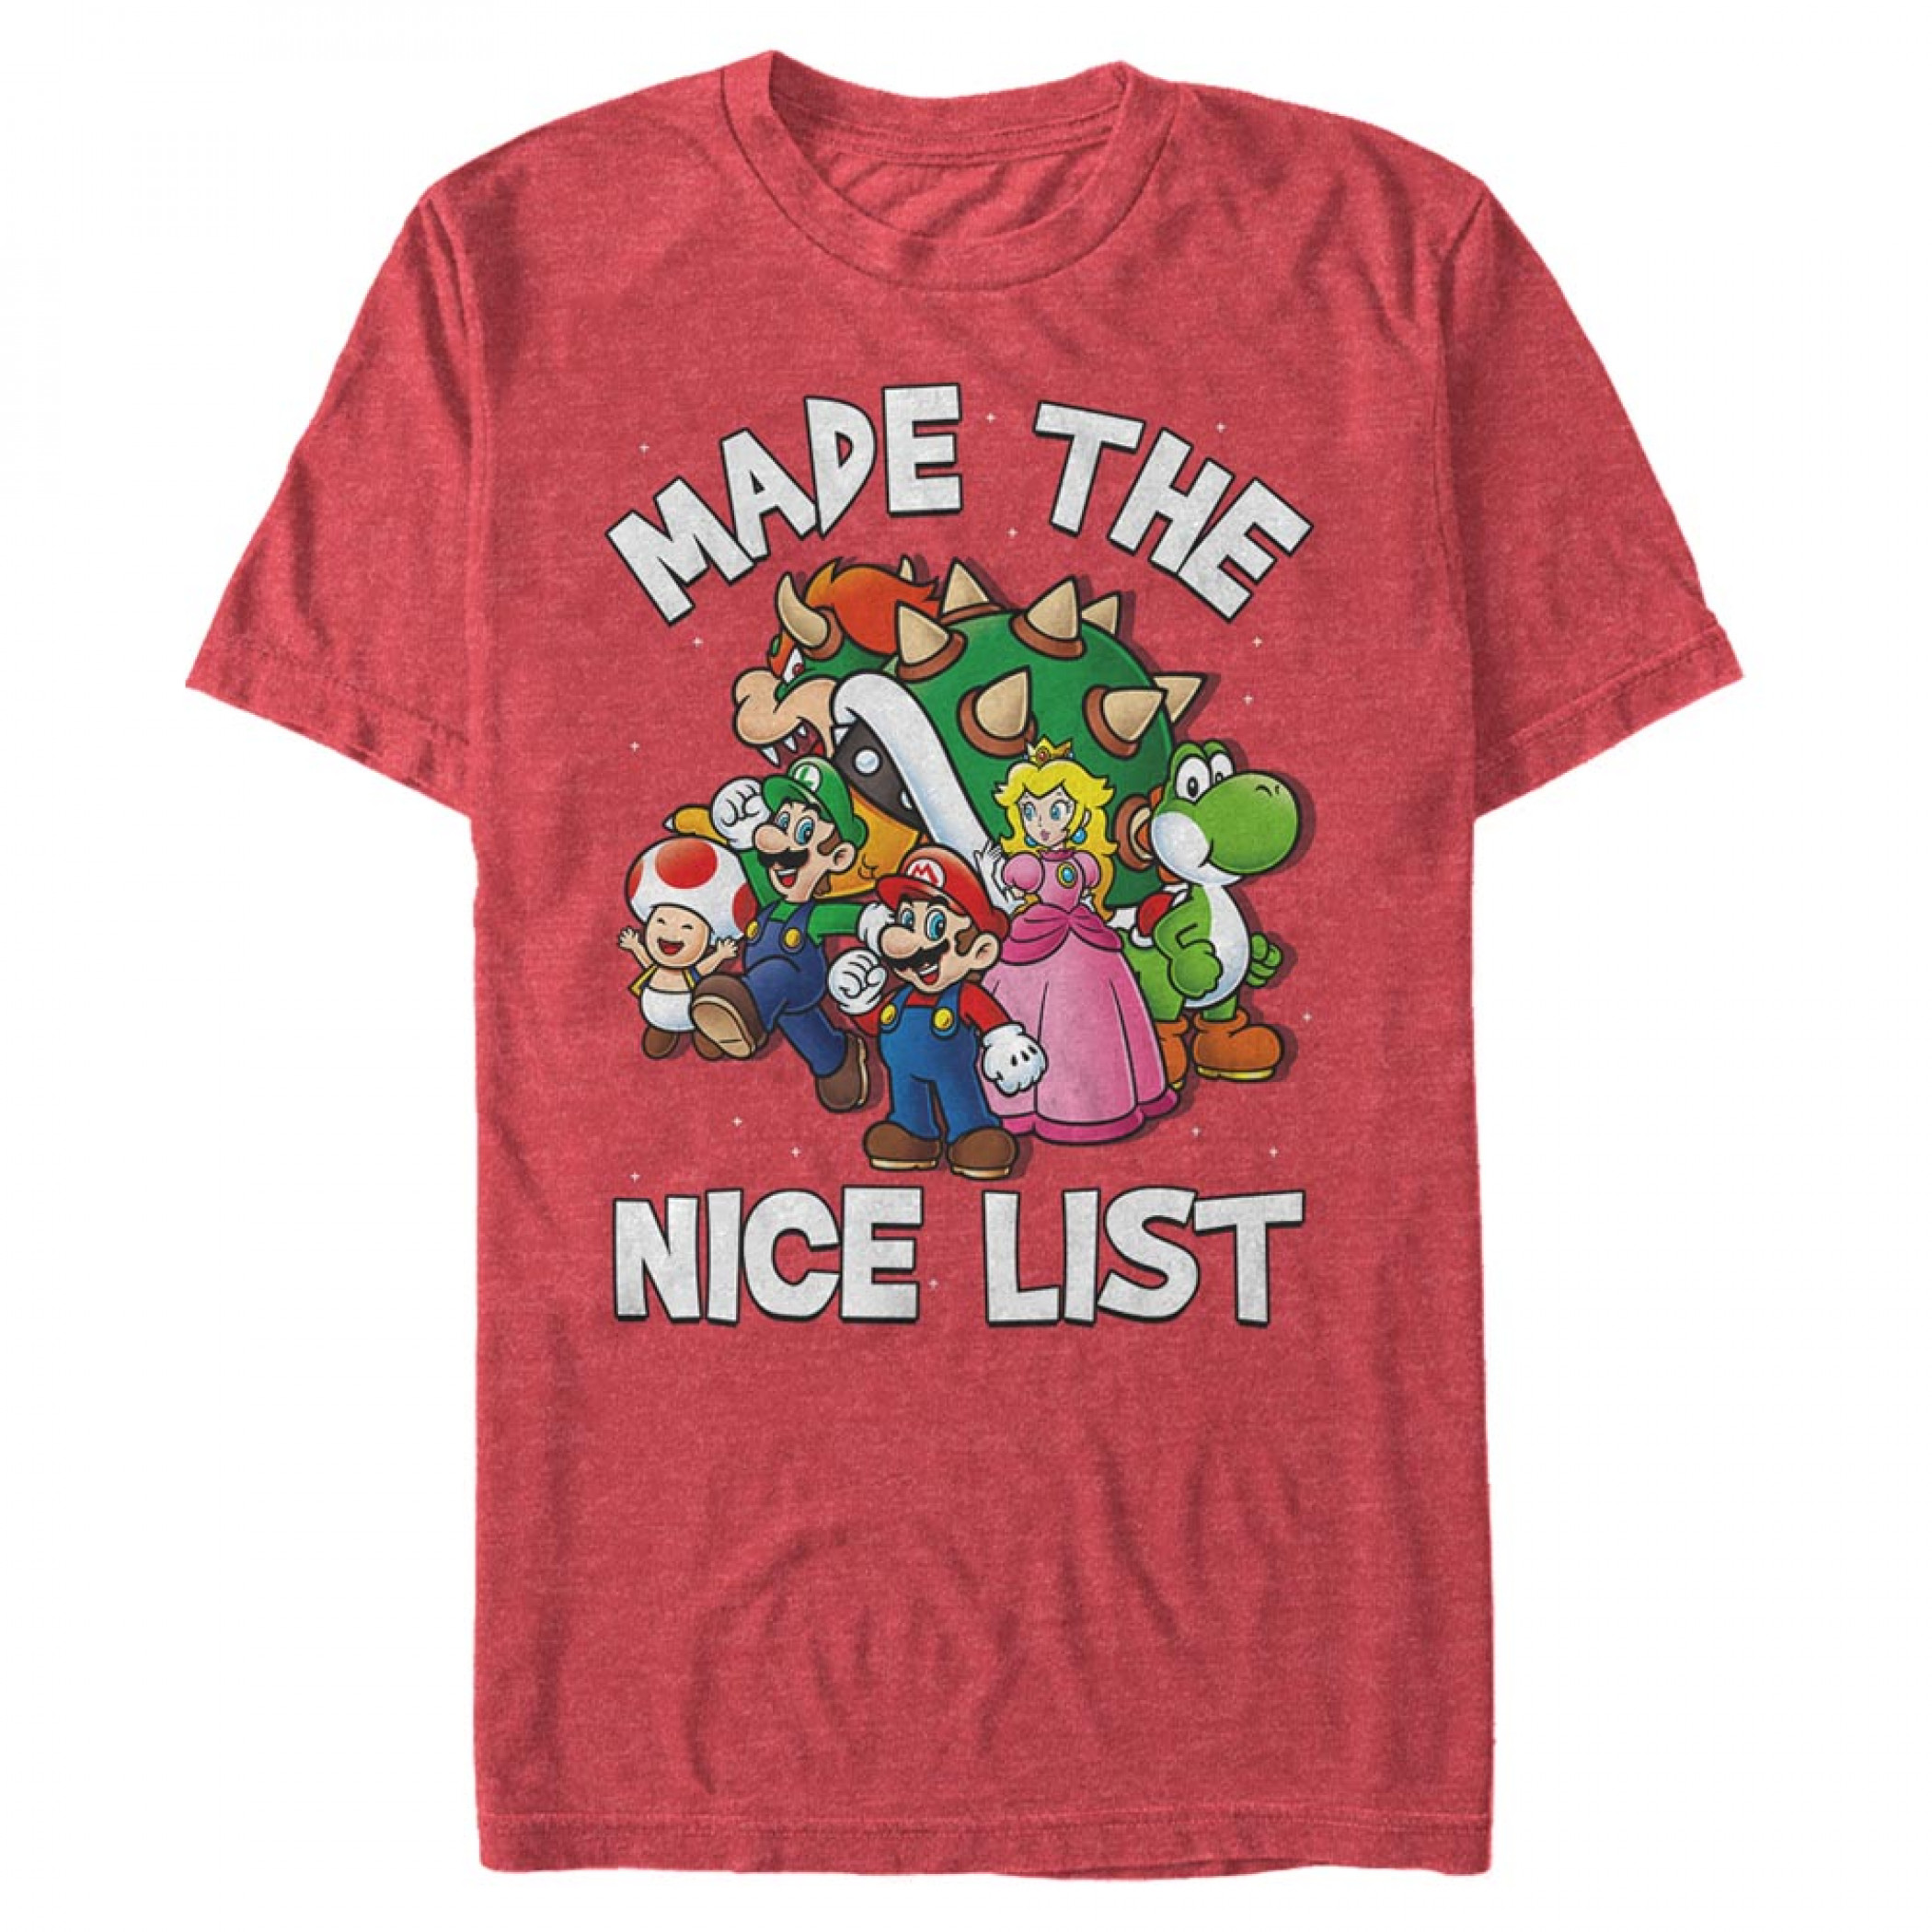 Super Mario Bros. Making the Nice List T-Shirt